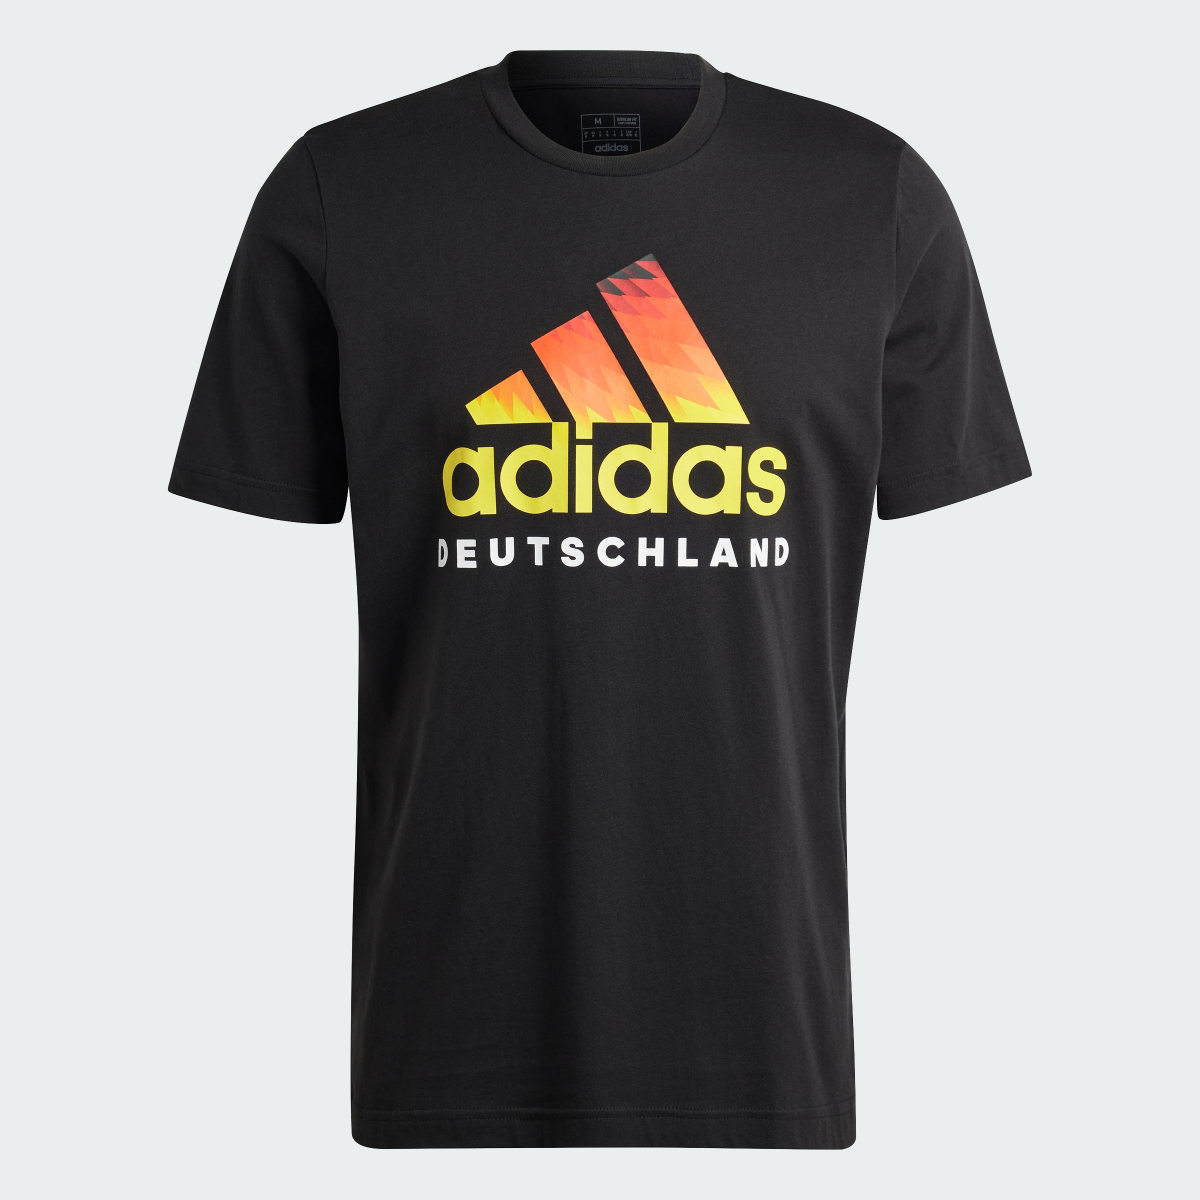 Adidas T-shirt graphique Allemagne DNA. 4